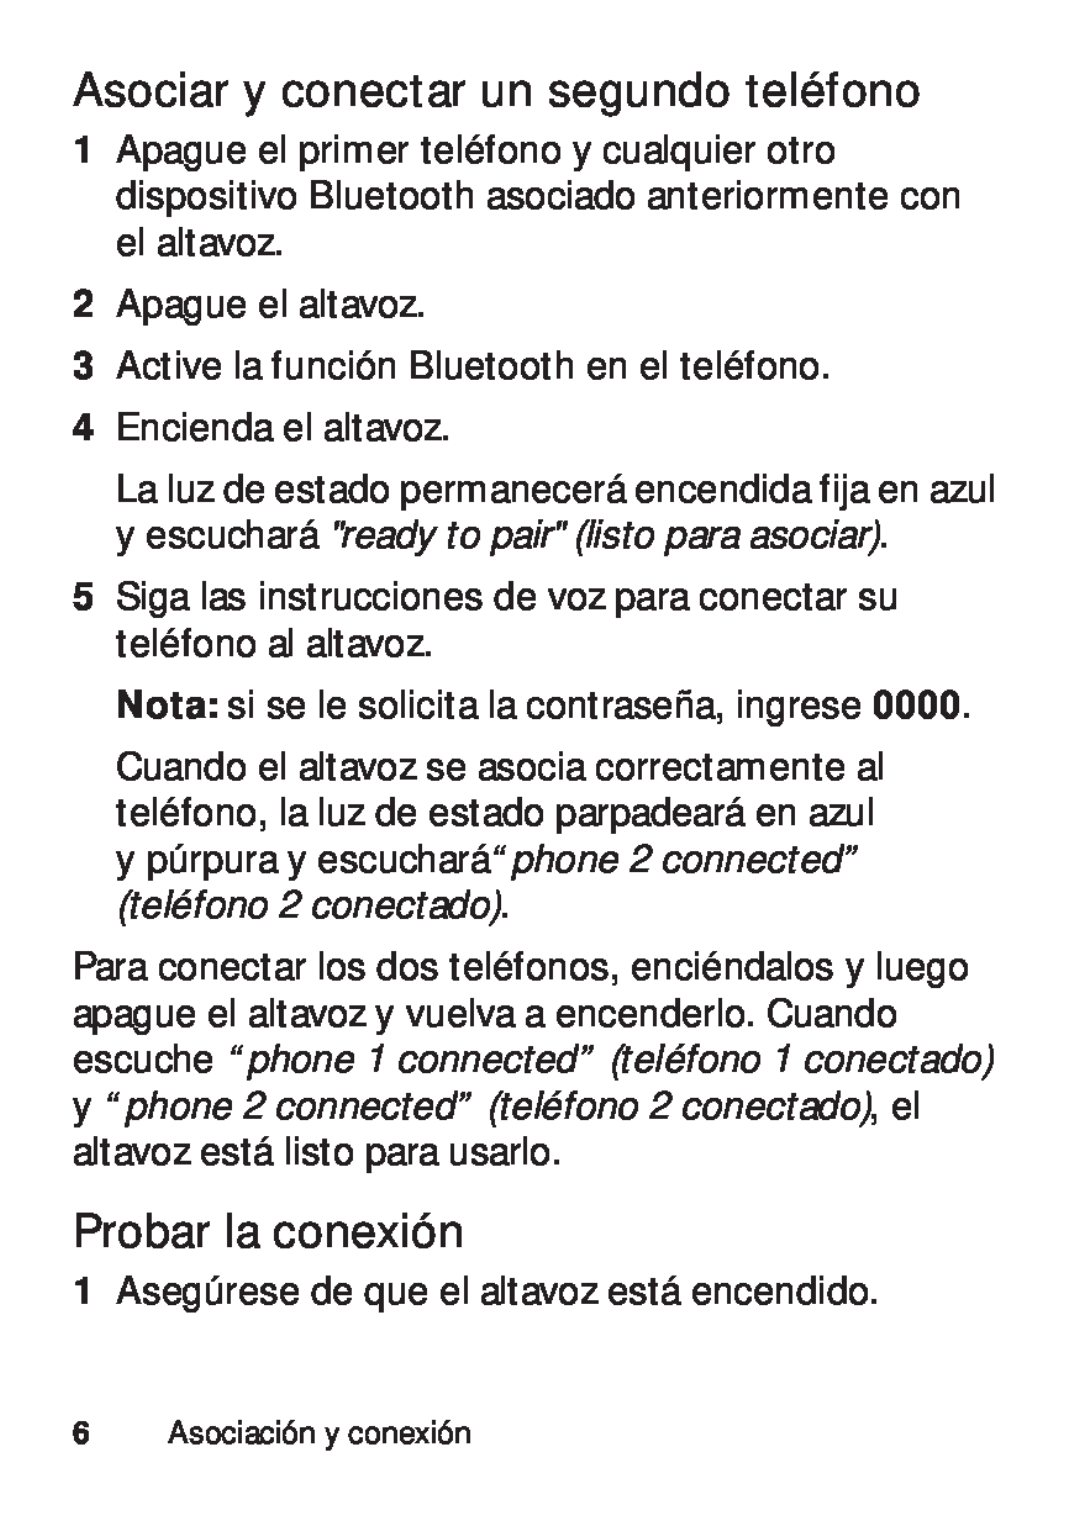 Motorola TX500 manual Asociar y conectar un segundo teléfono, Probar la conexión 